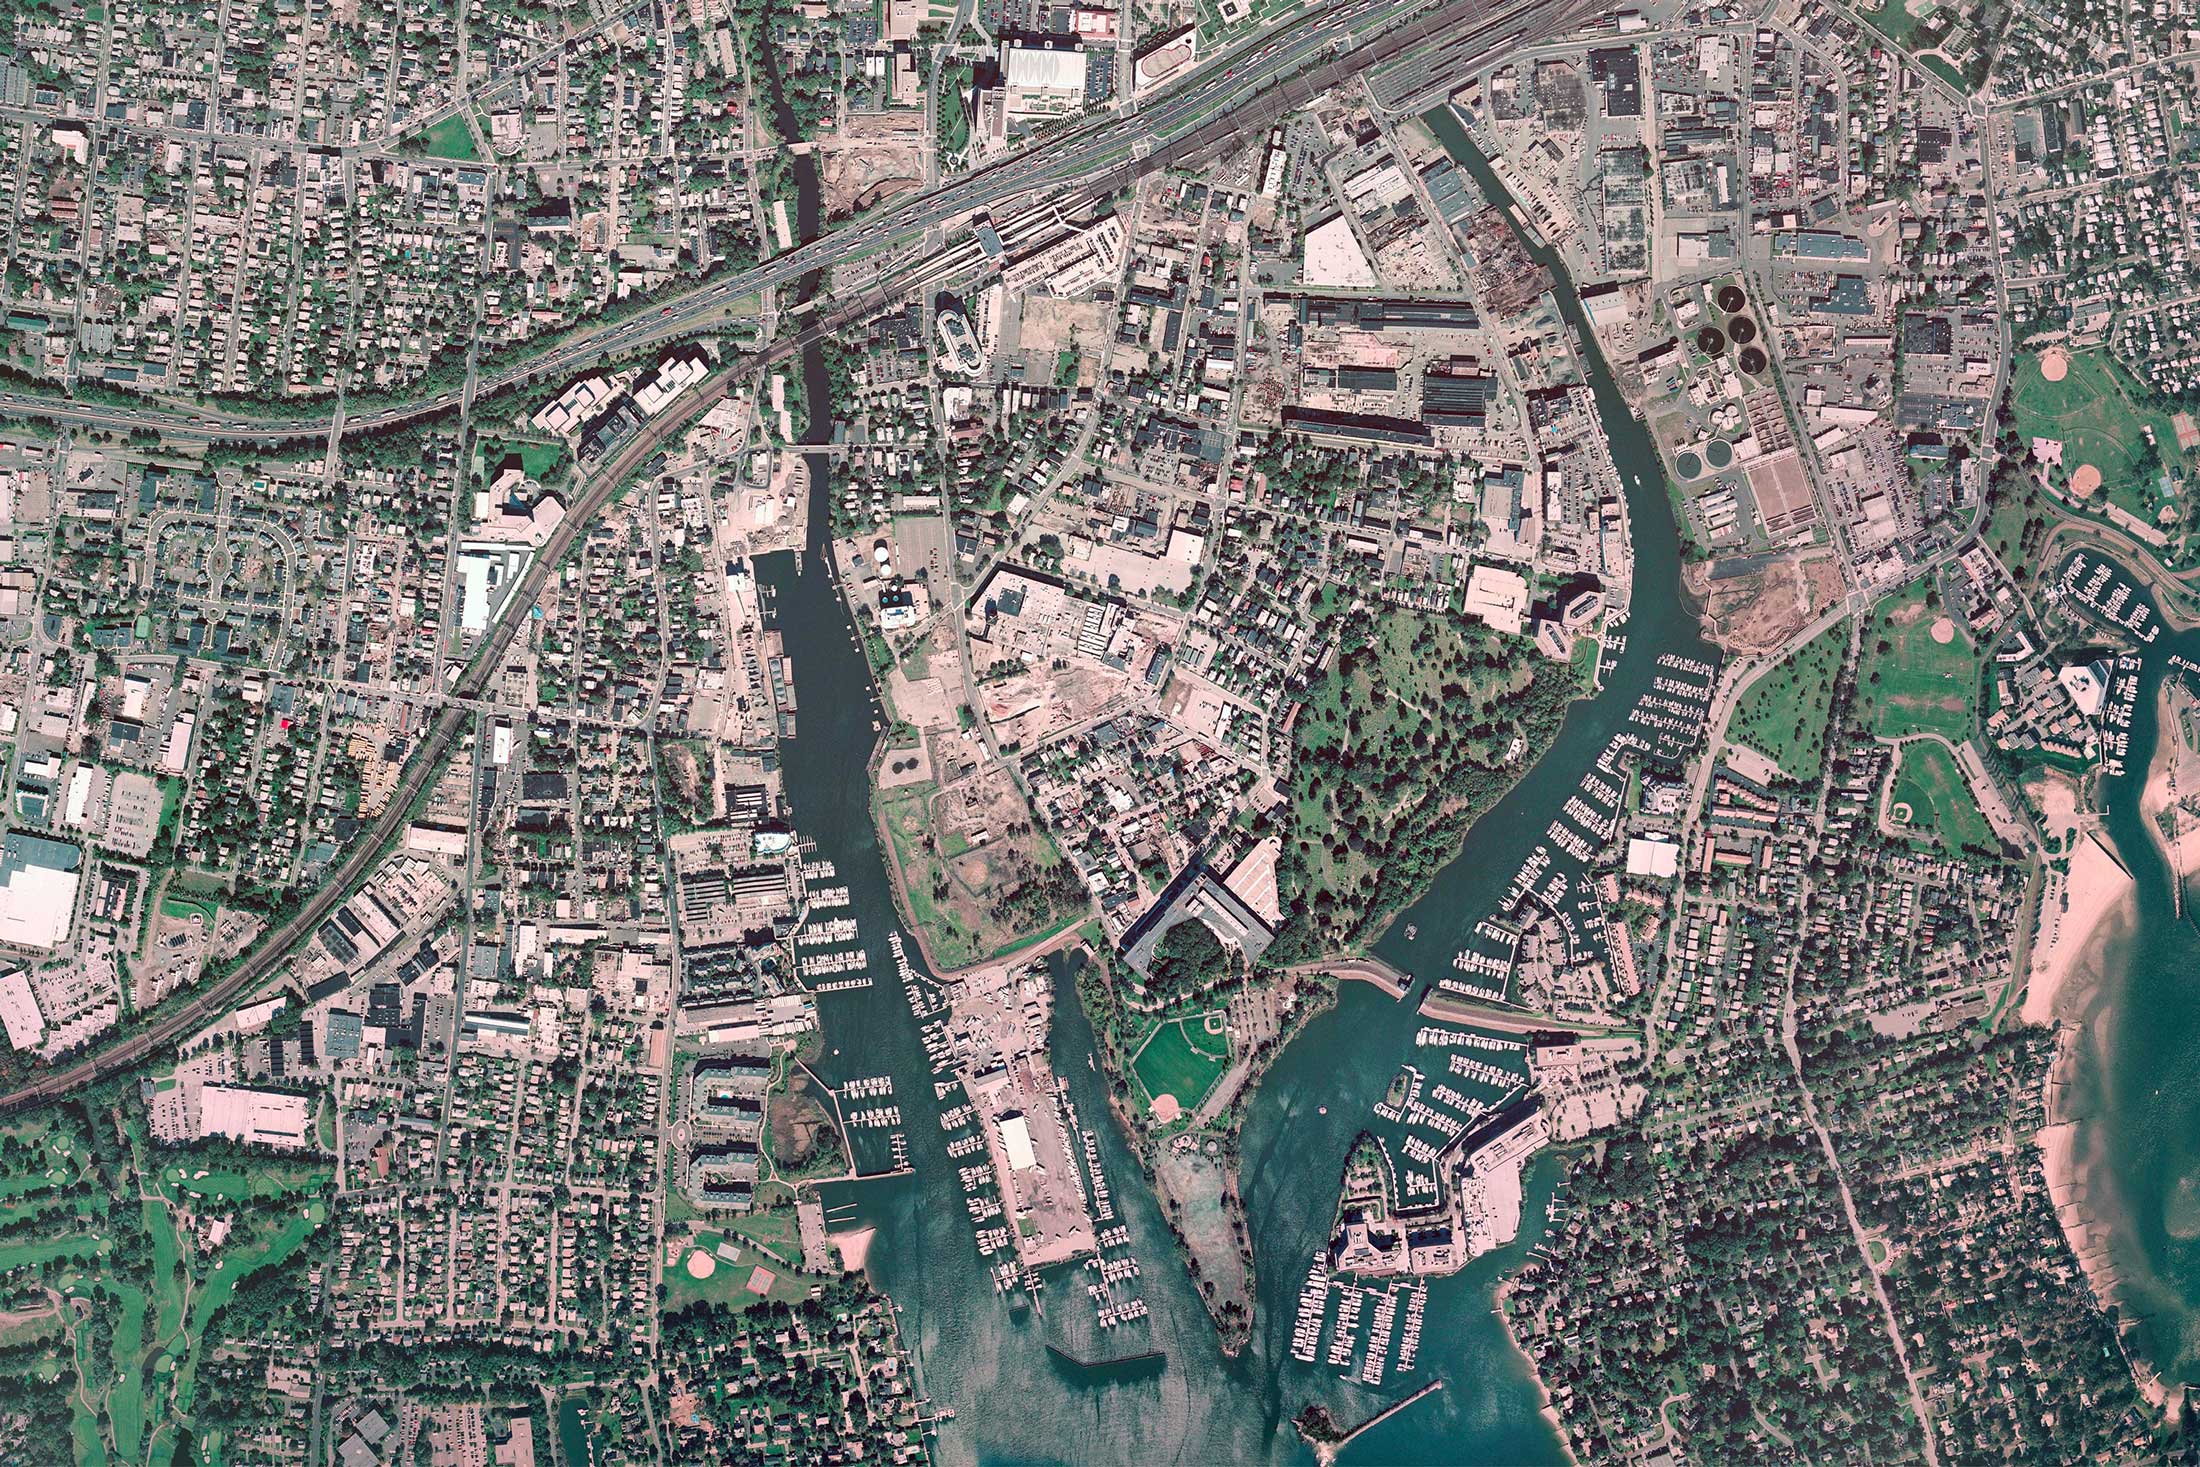 Harbor Point overhead comparison satellite view 2006